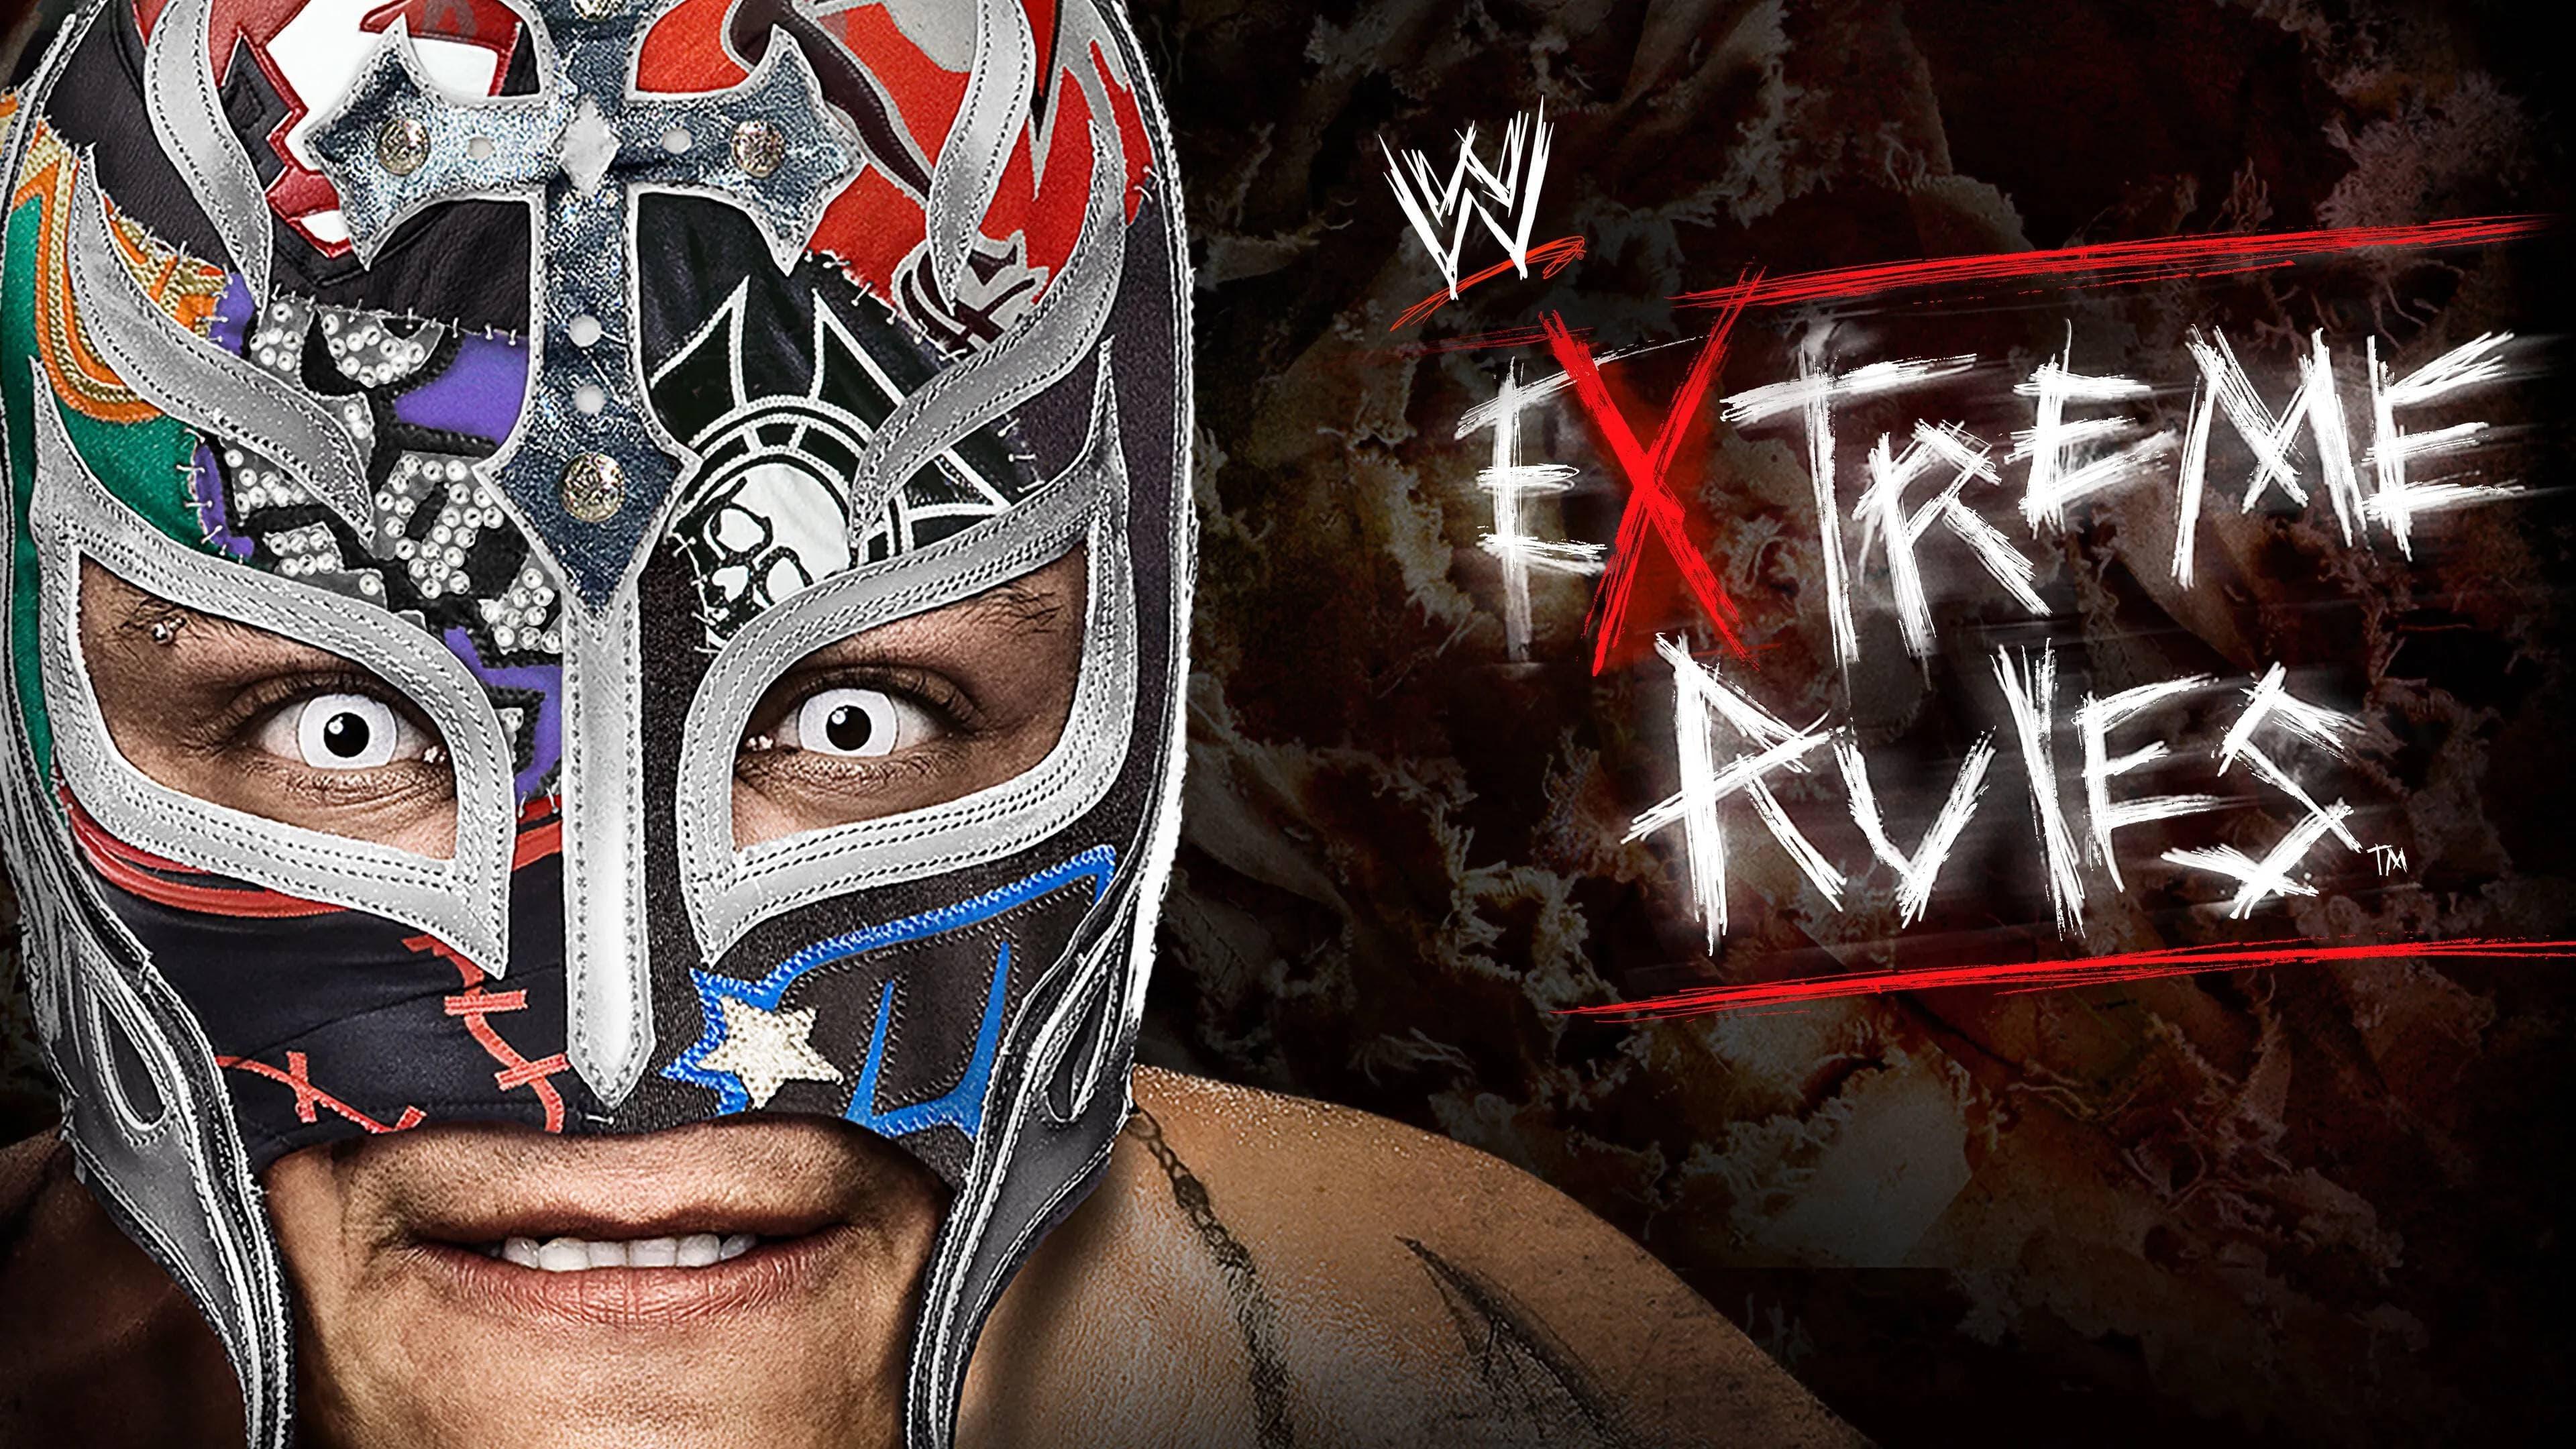 WWE Extreme Rules 2009 backdrop